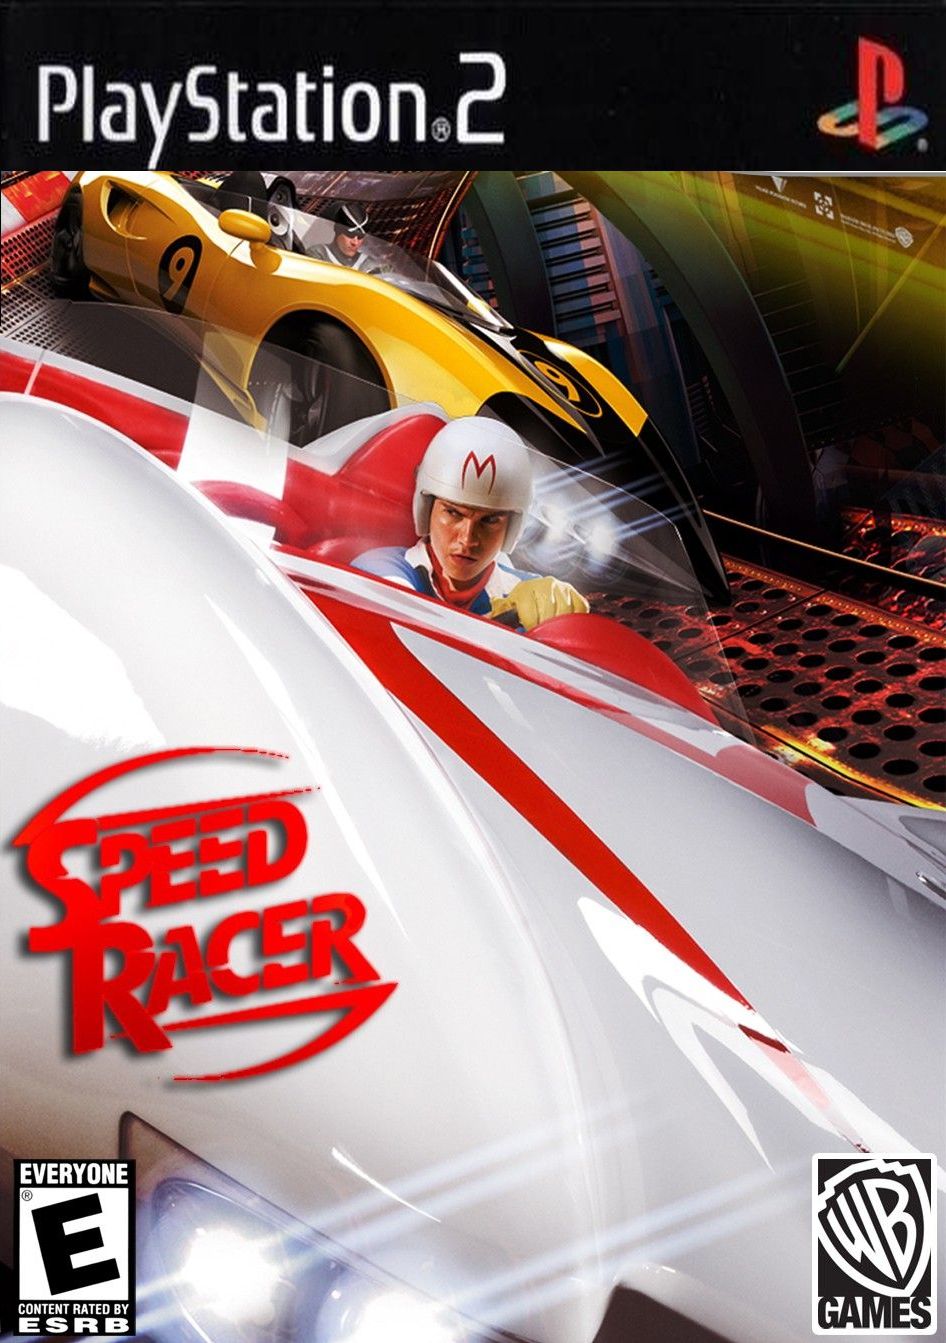 Speed Racer: The Video Game PS2 (USADO) - Fenix GZ - 16 anos no mercado!